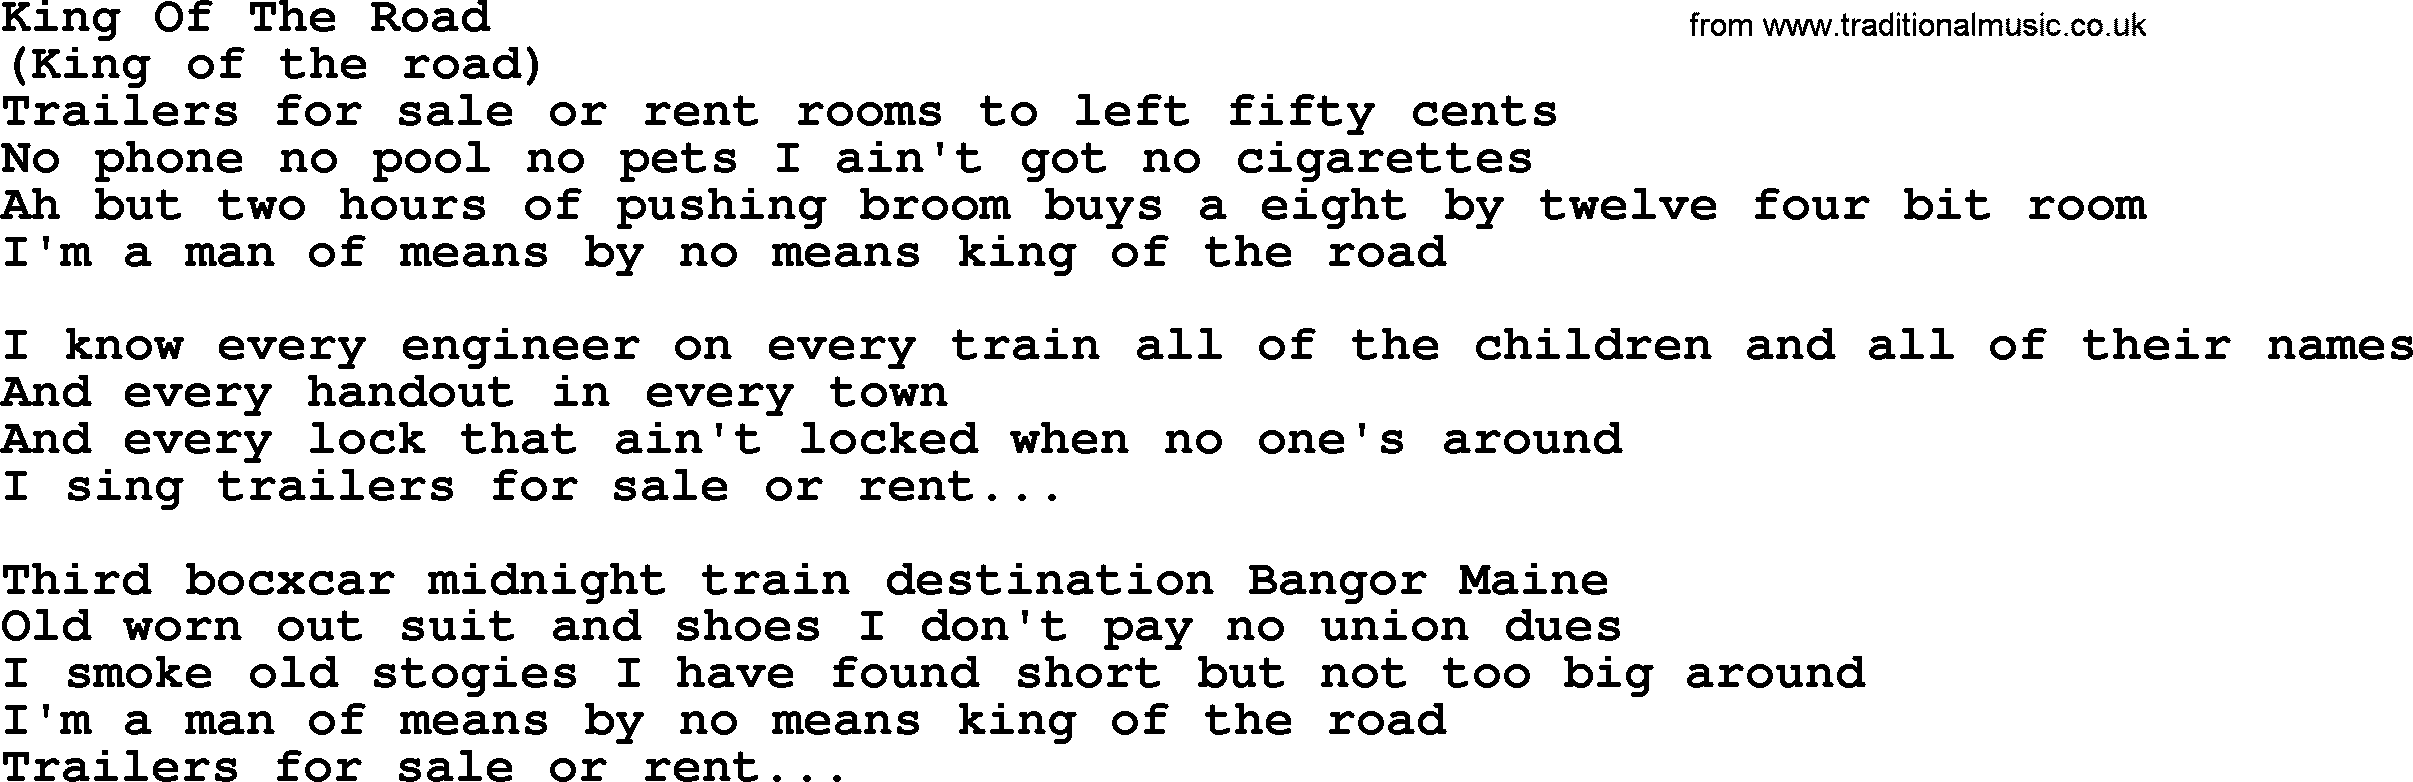 George Jones song: King Of The Road, lyrics